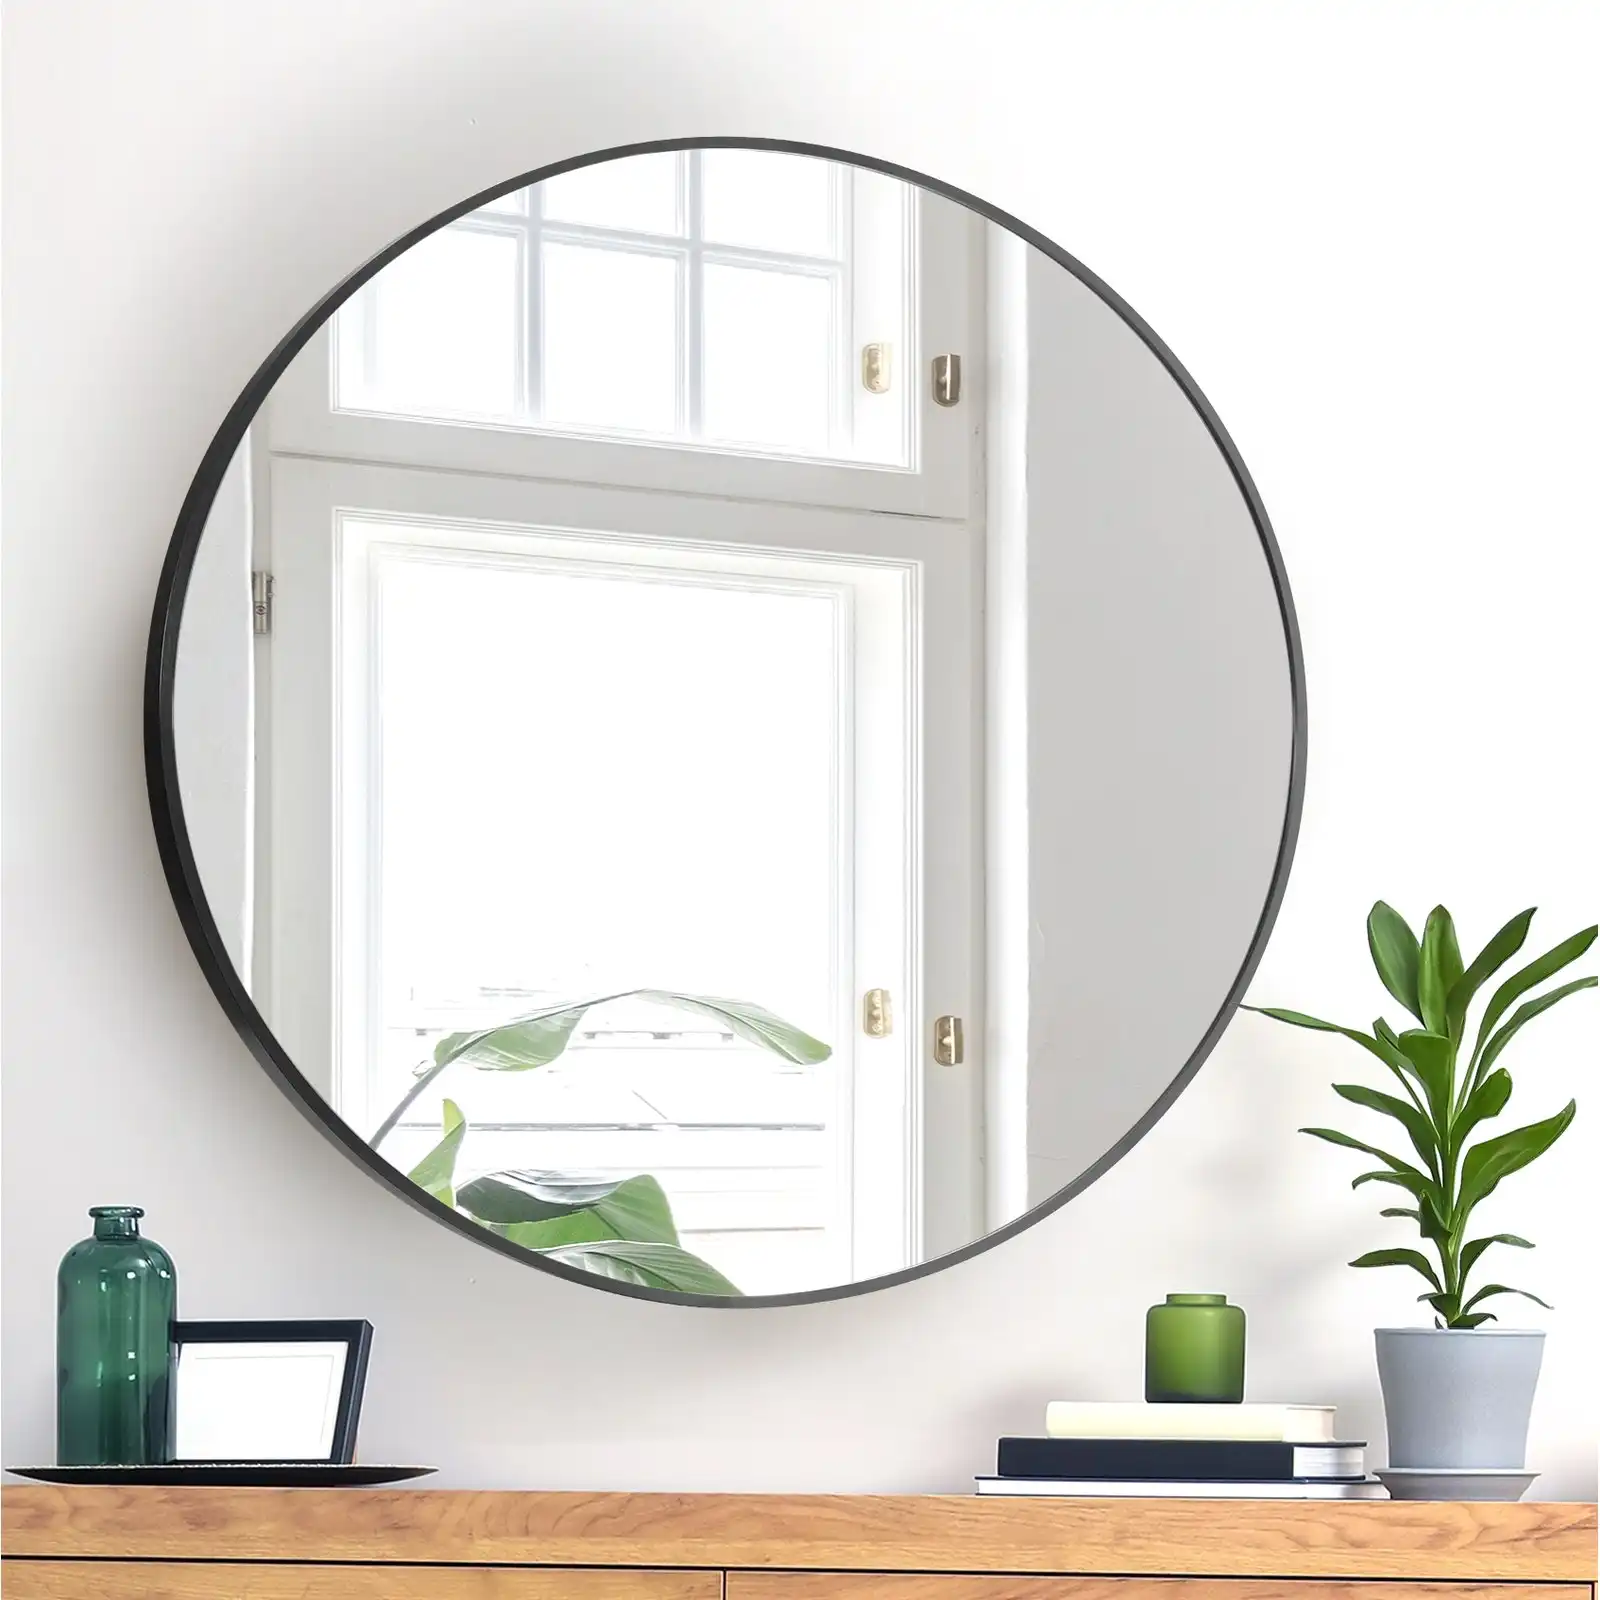 Oikiture Wall Mirrors Round 70cm Makeup Mirror Vanity Home Decro Black Bathroom